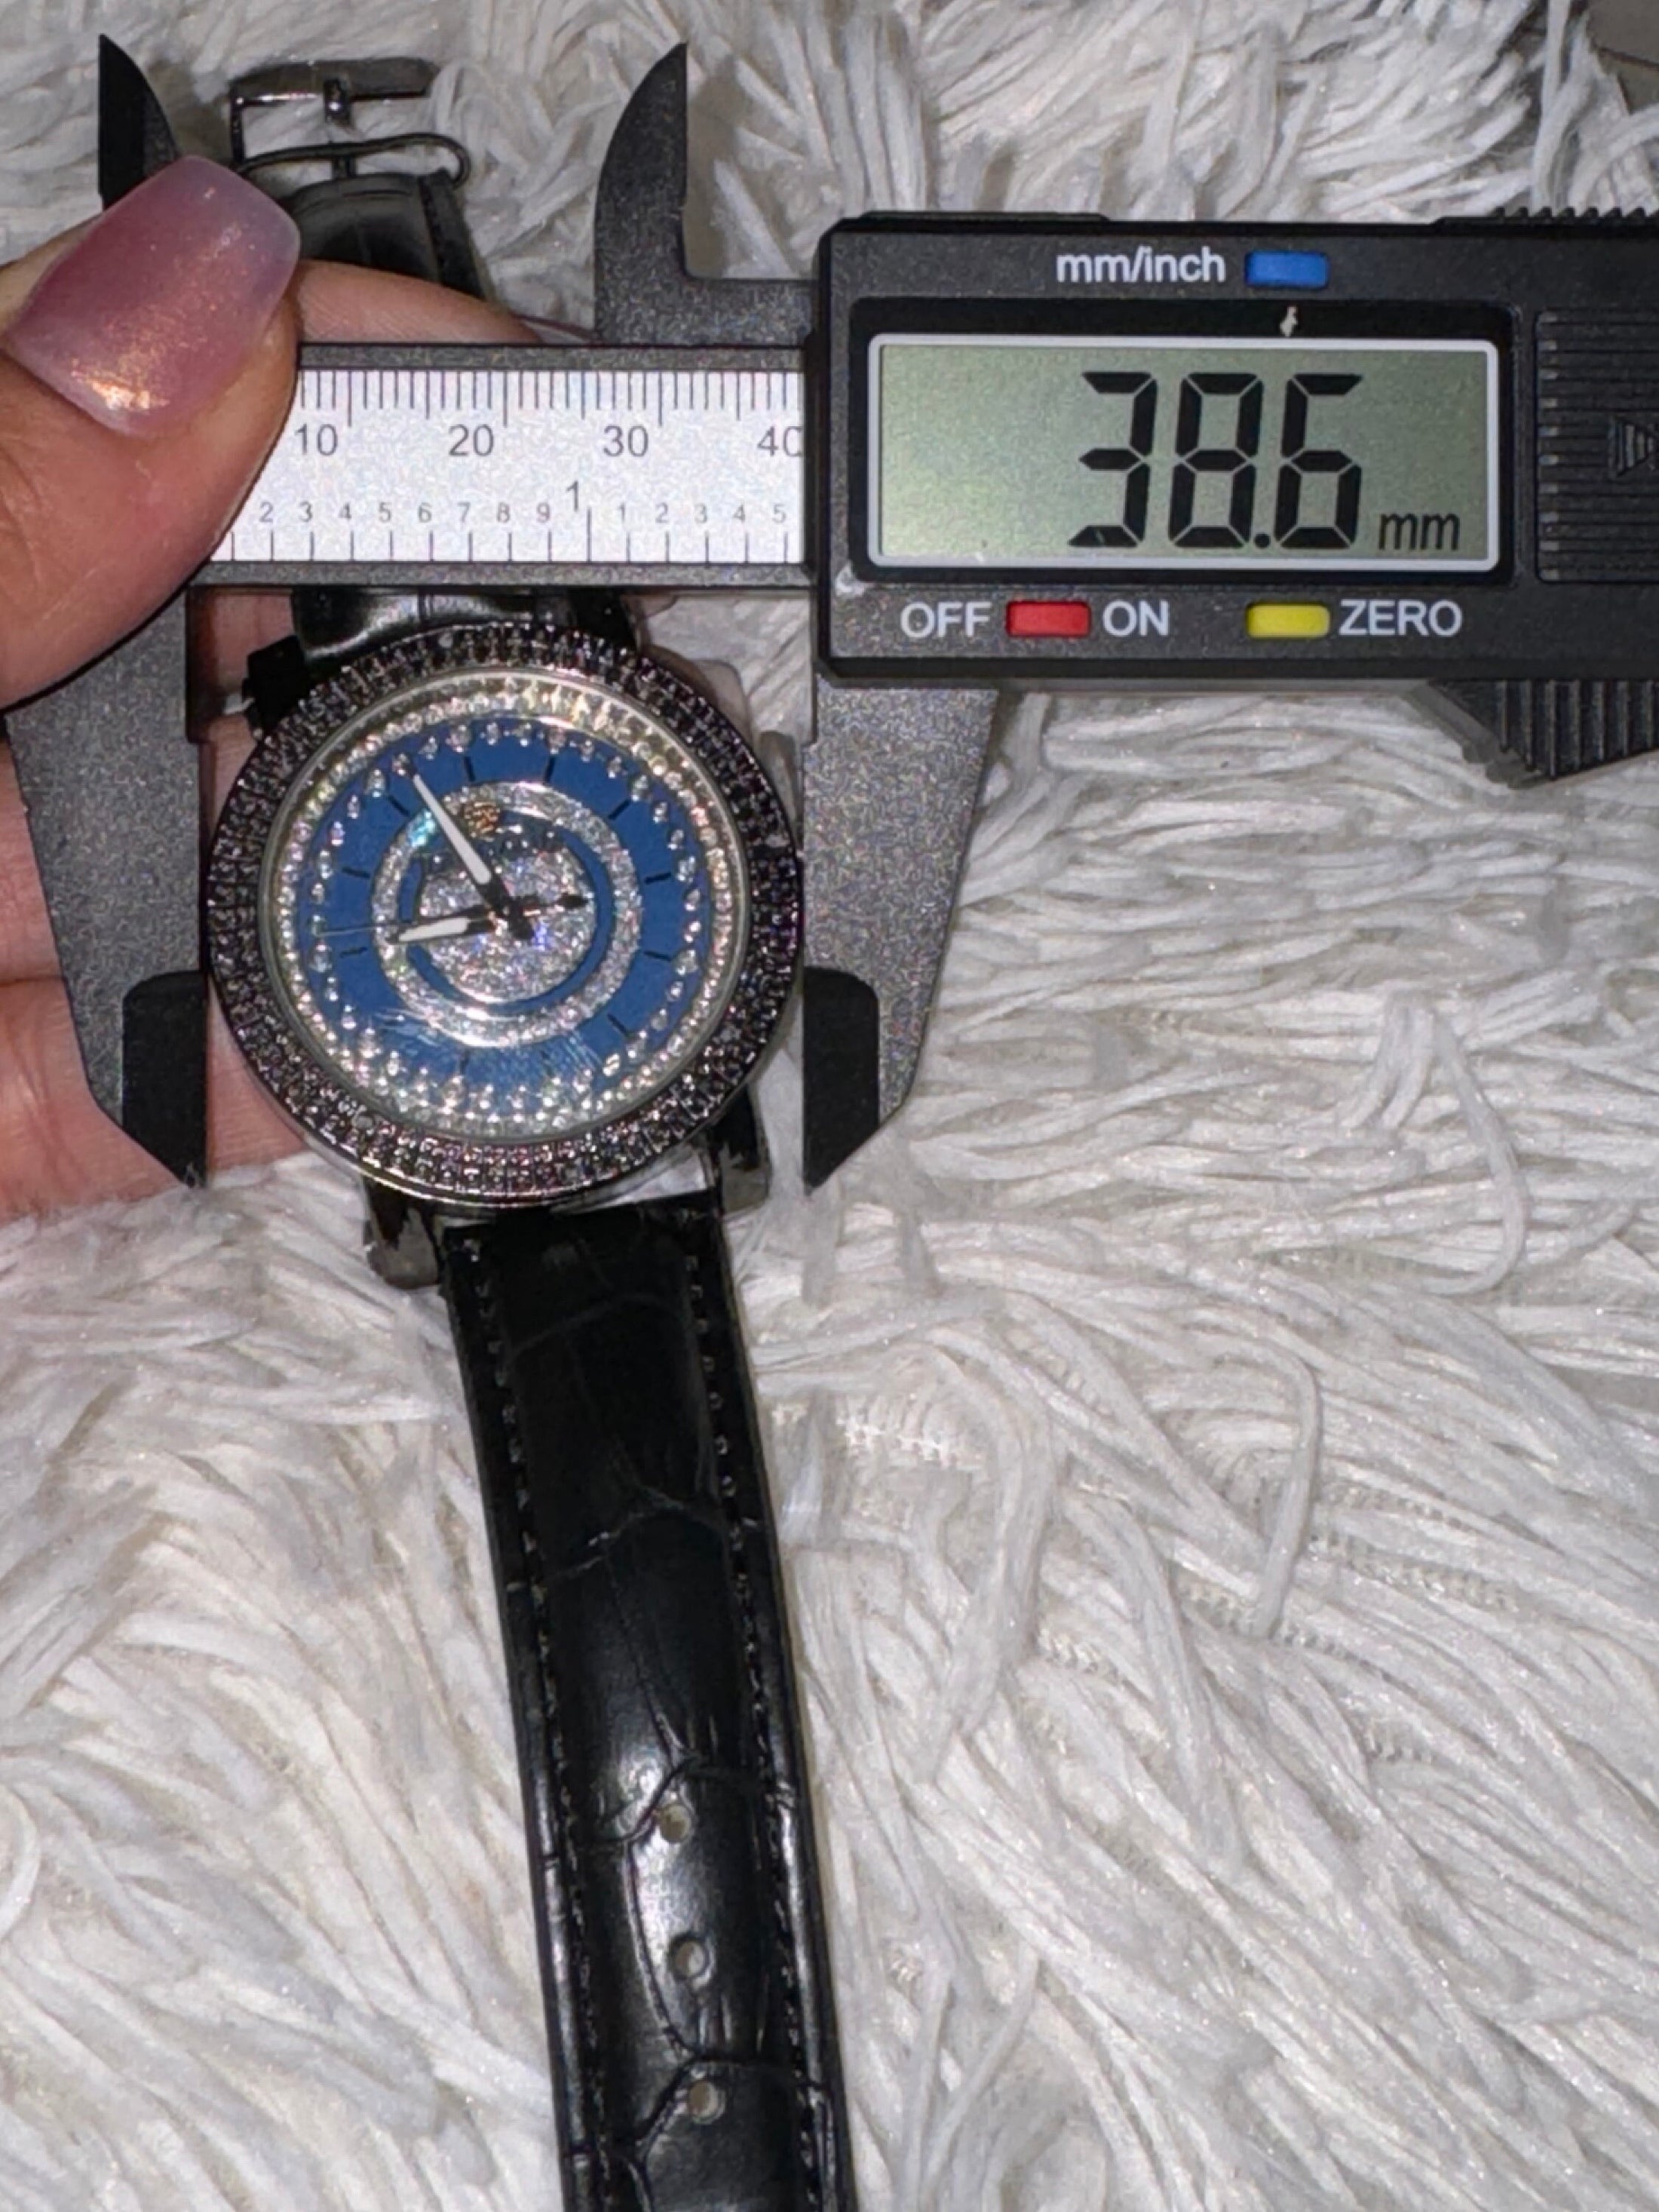 Real Diamond watch - Men's Diamond Watch - Genuine 1/10 Carat Natural Diamonds - Perfect Gift for Him, Anniversary, Birthday, Christmas Gift